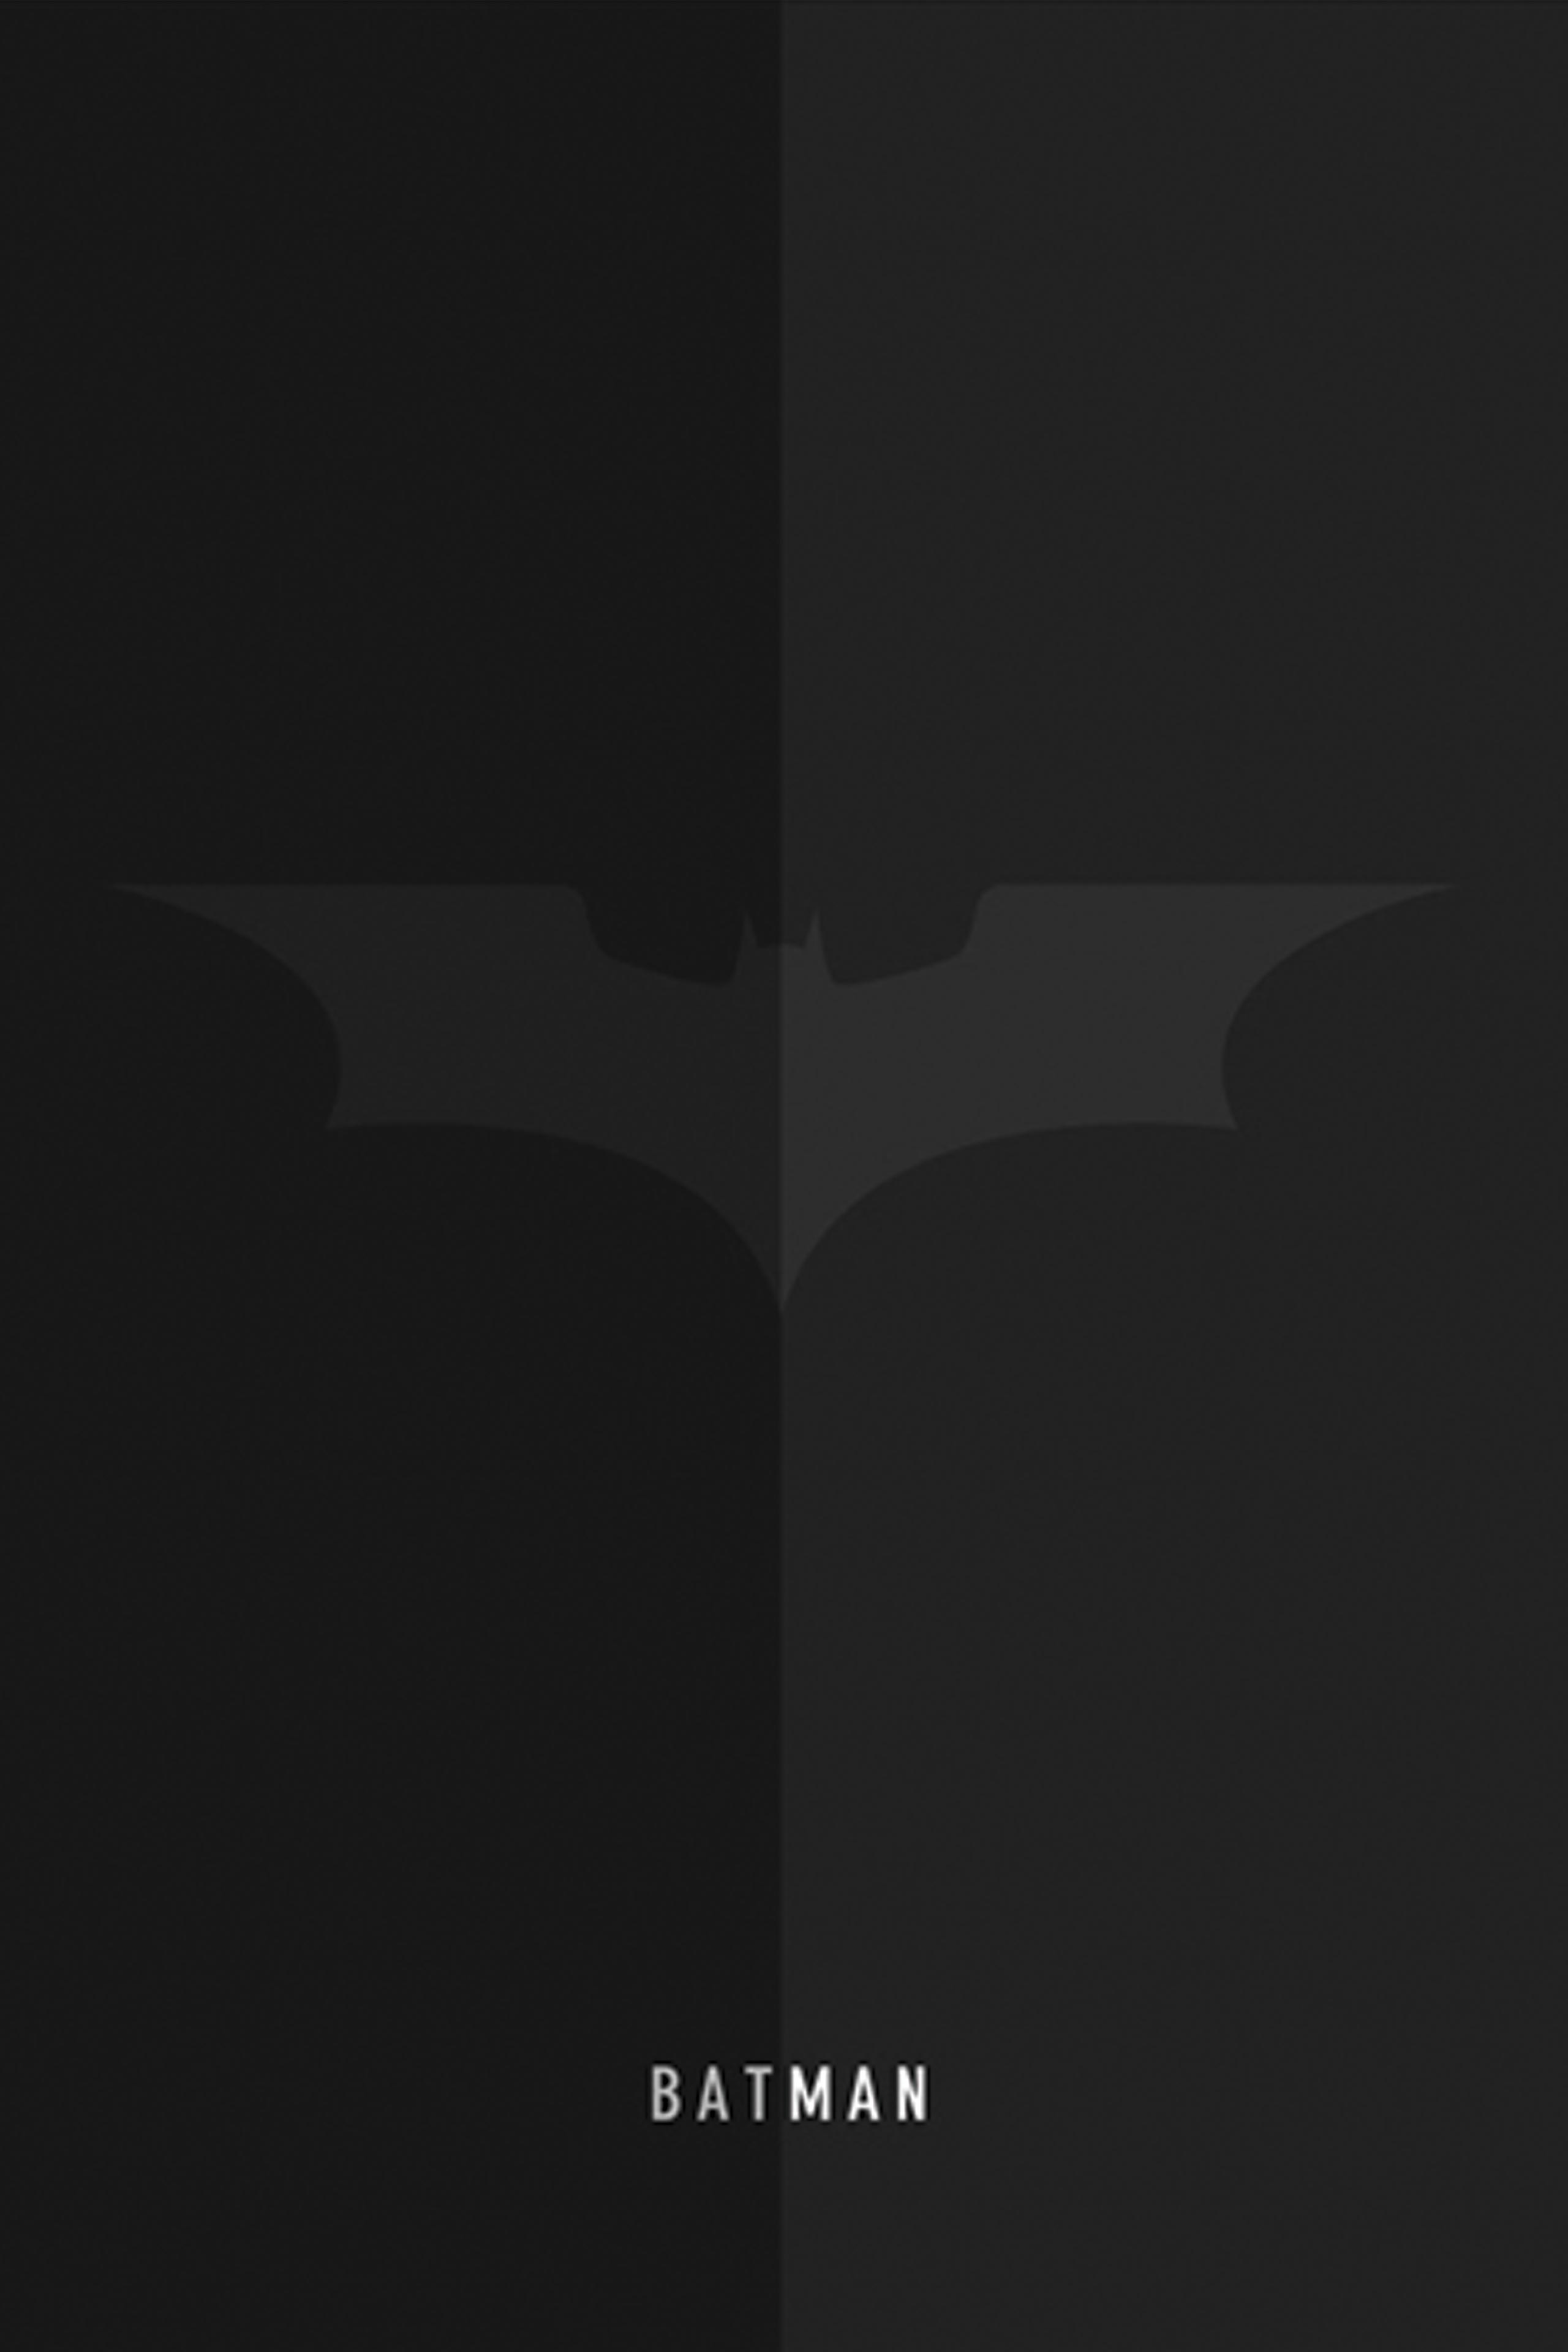 Batman Iphone Wallpapers Top Free Batman Iphone